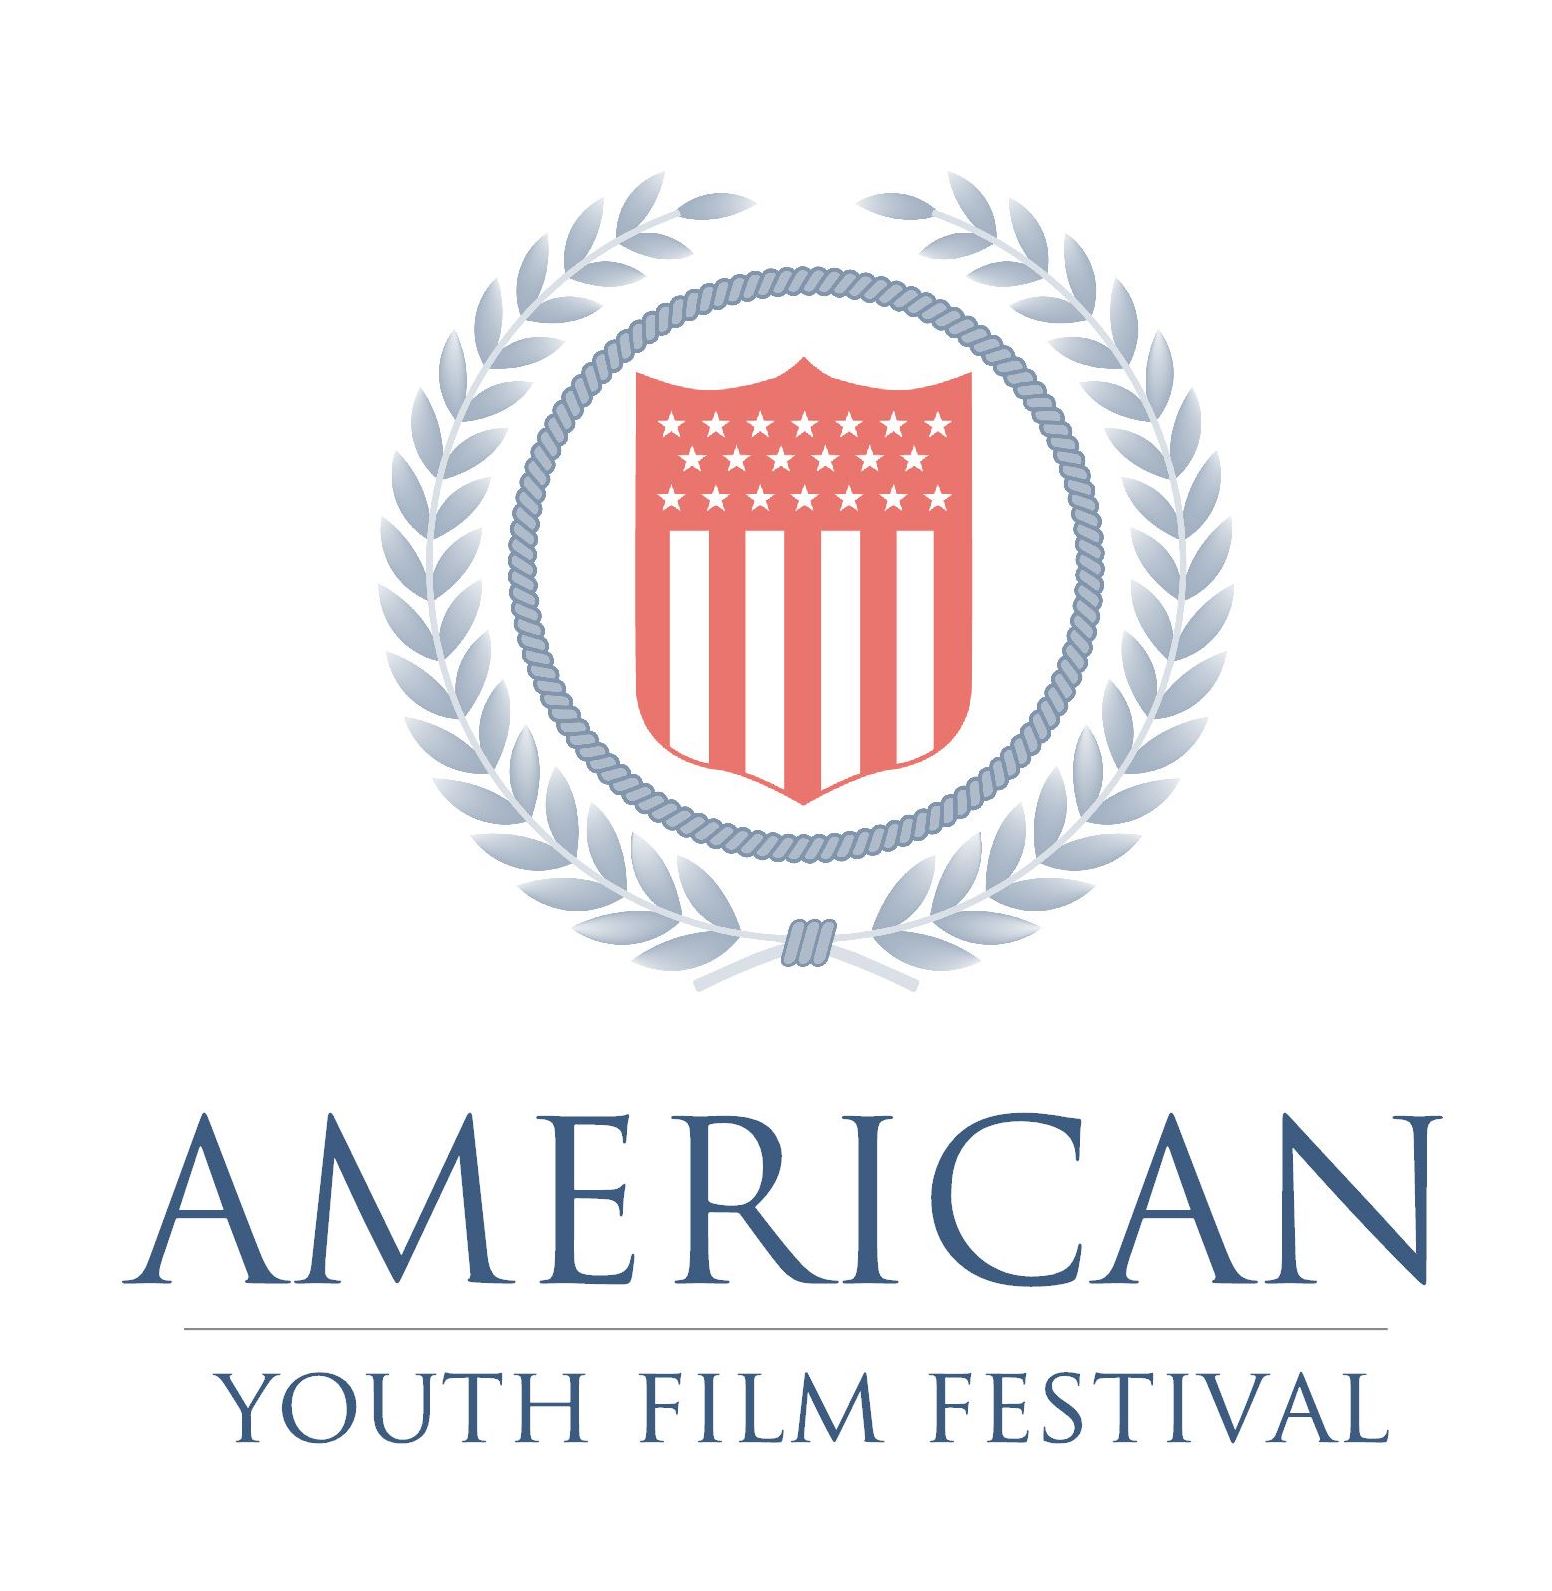 American Youth Film Festival Merchandise